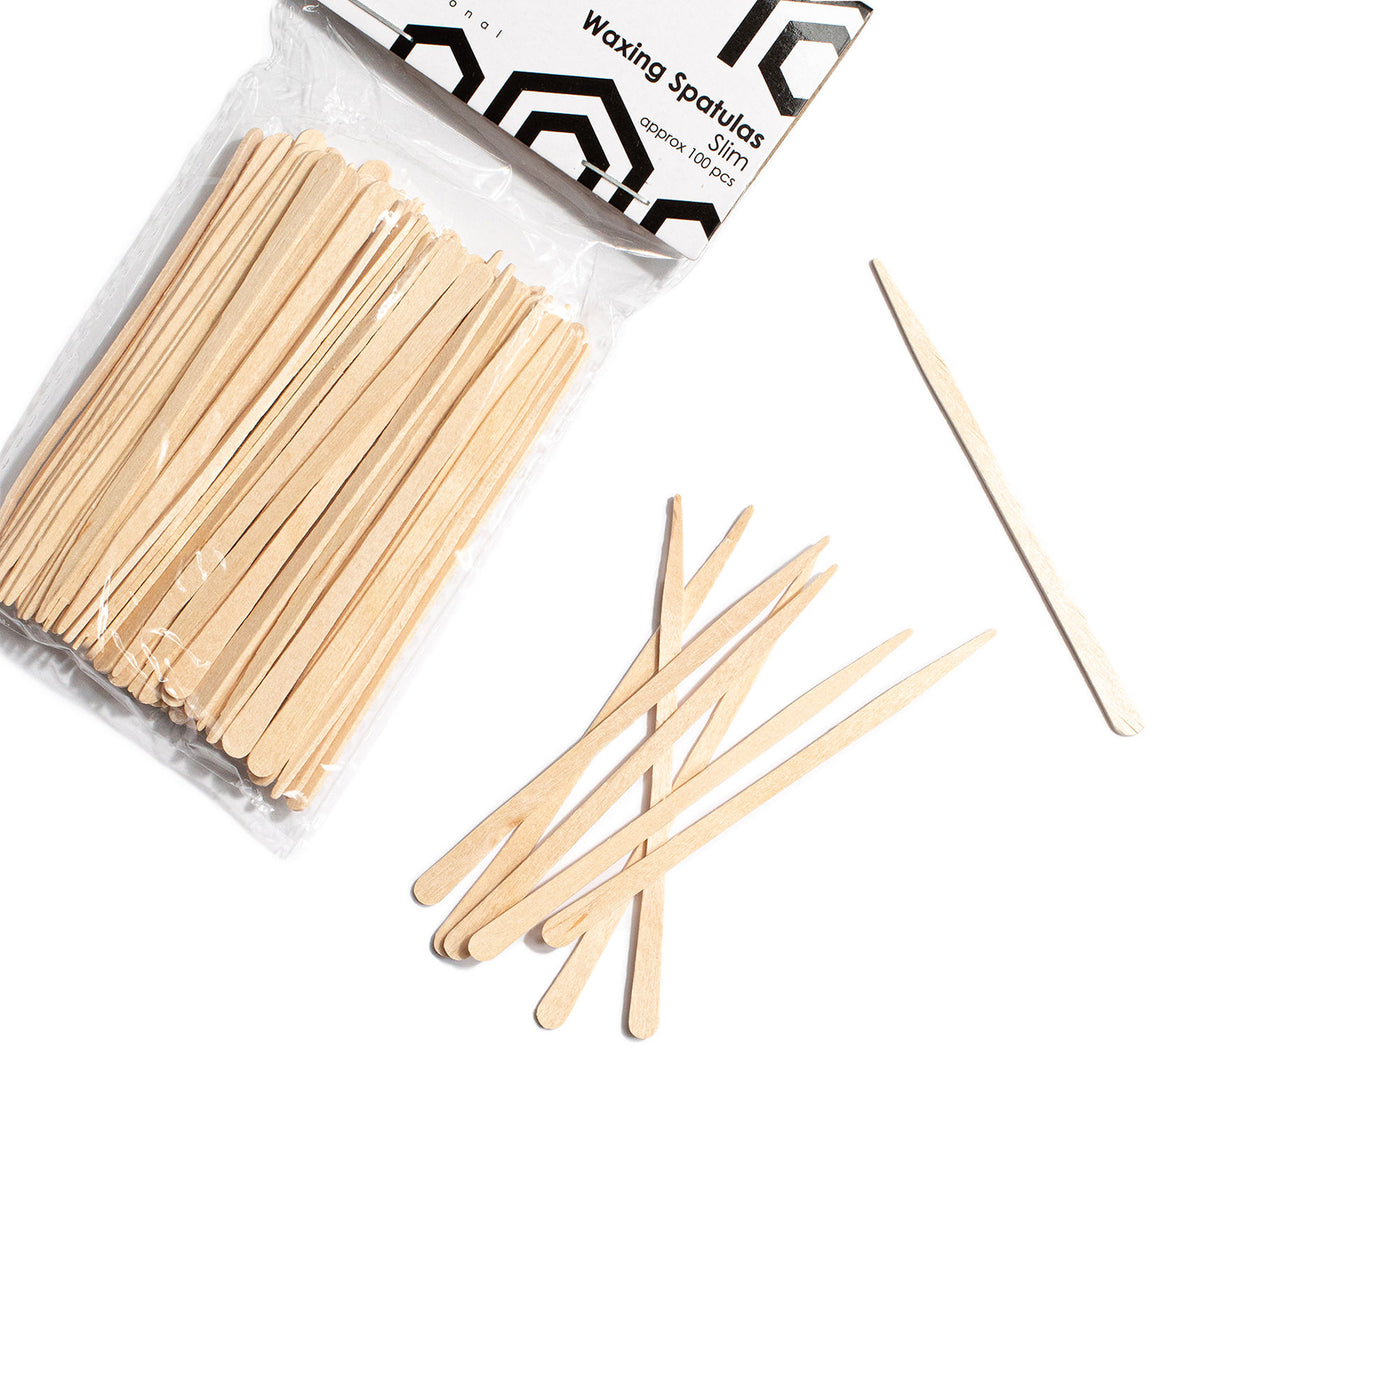 Beauticom 1000pcs 3.5” Small Waxing Spatula Wood Applicator Sticks Spoon  Shaped For Facial Hair Removal 